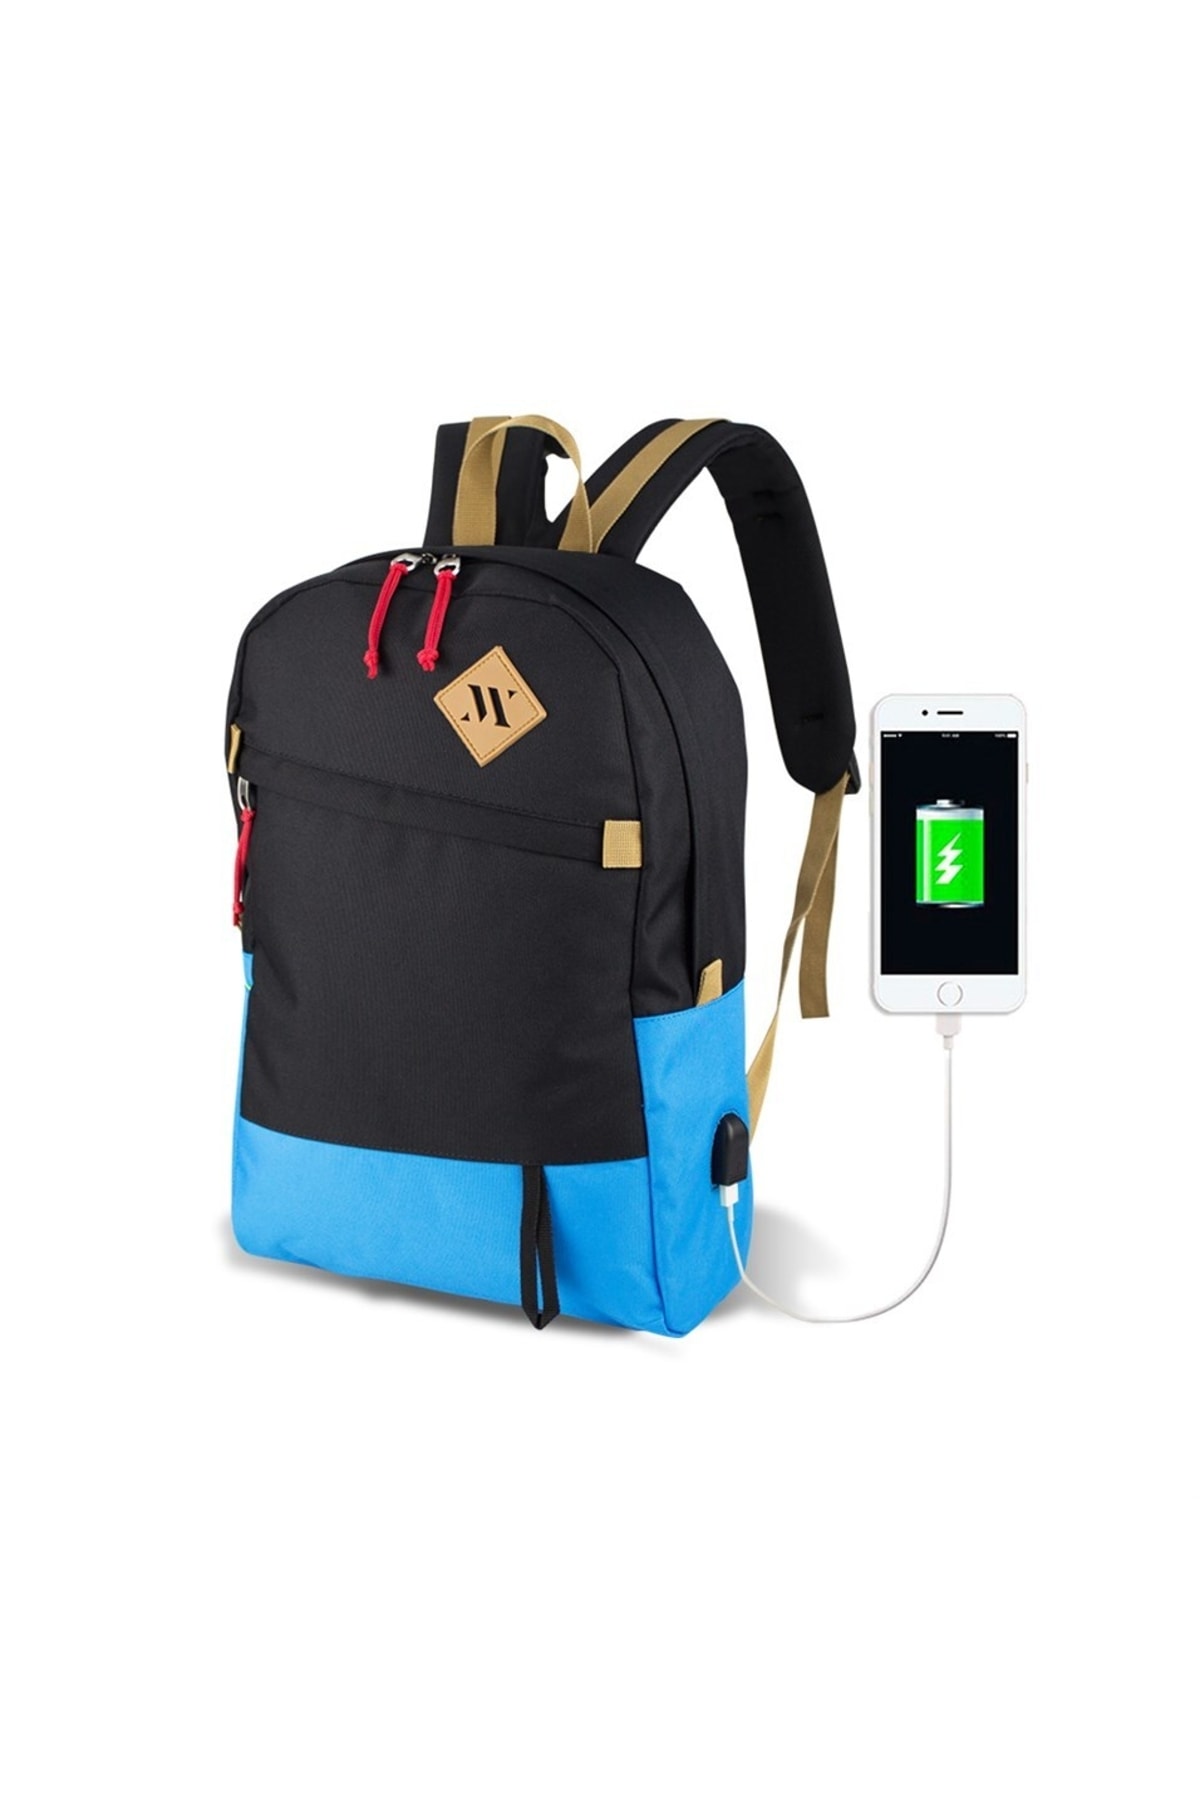 My Valice Smart Bag Freedom Usb Şarj Girişli Akıllı Laptop Sırt Çantası Siyah-Mavi